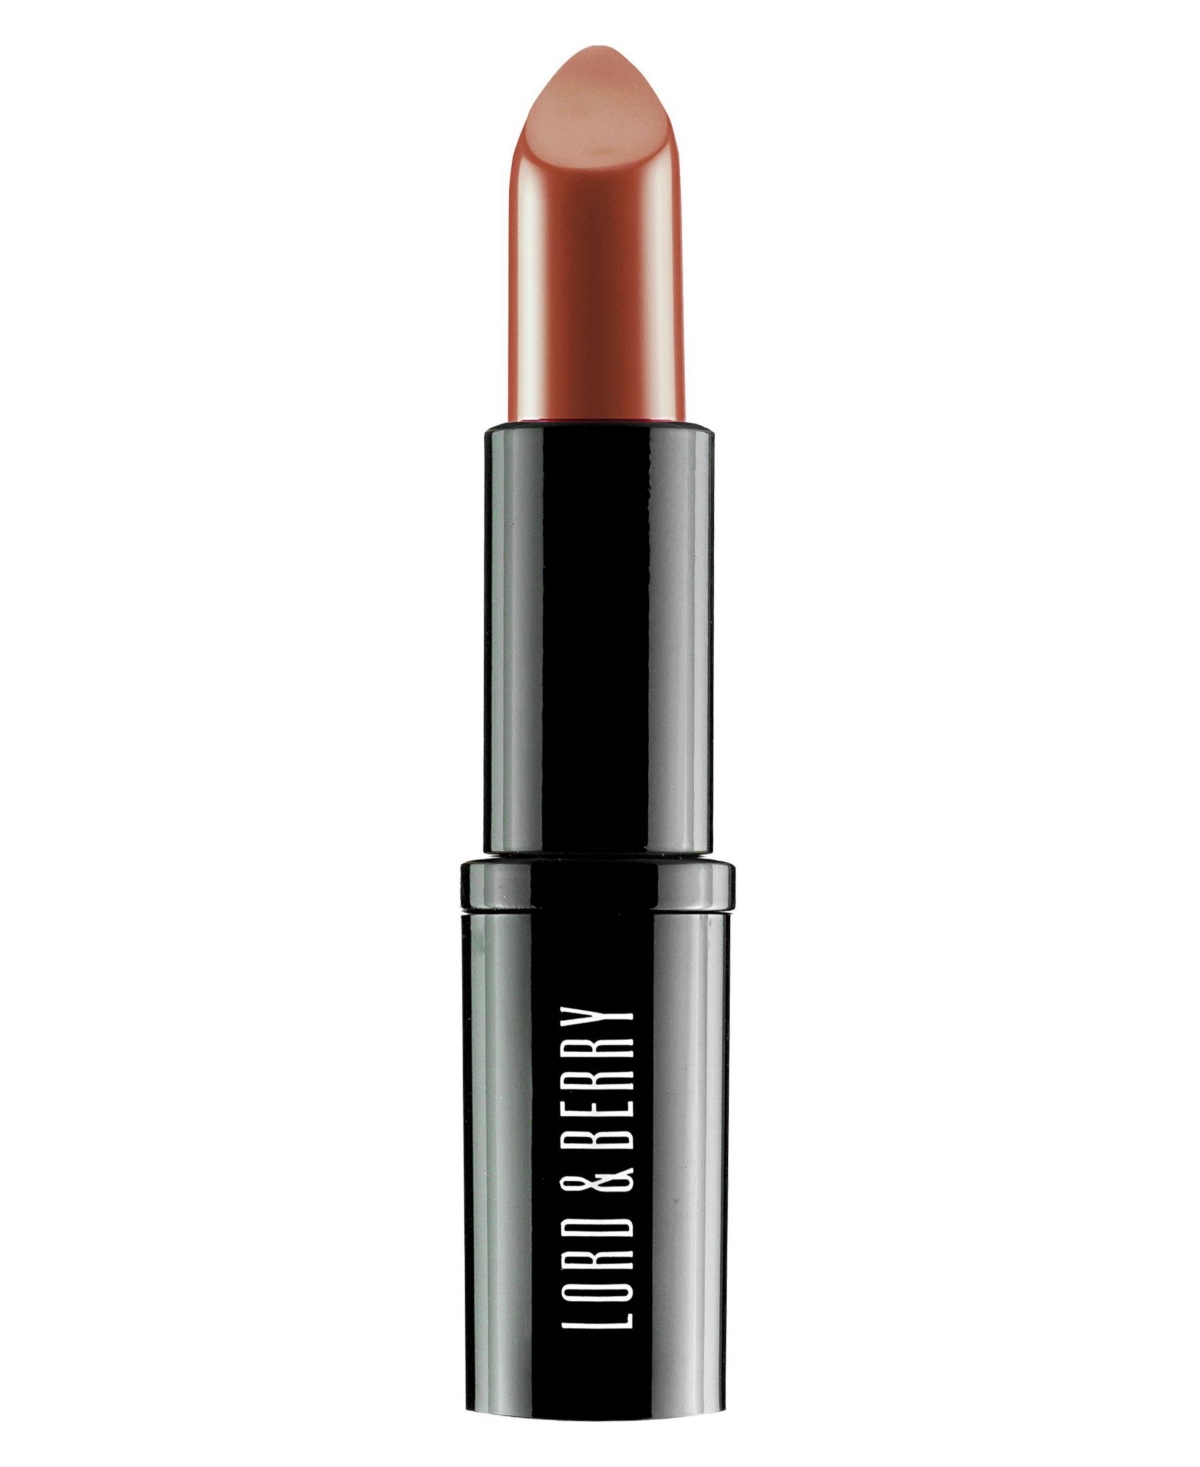 Lord & Berry Vogue Matte Lipstick